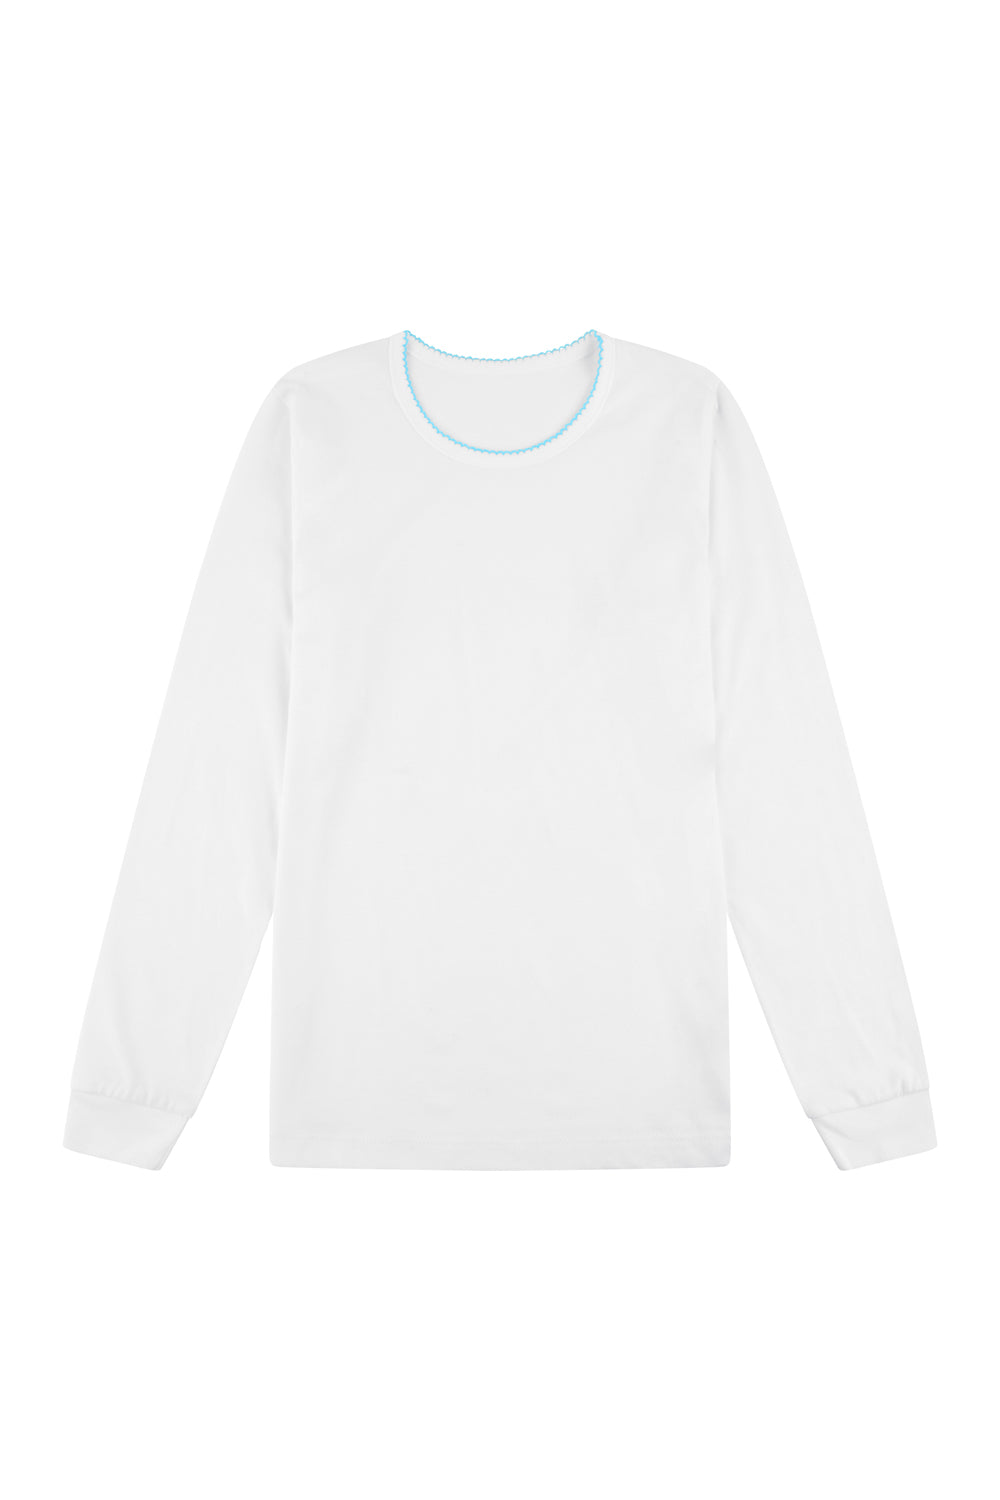 Girls Longsleeve 100% Cotton Vest